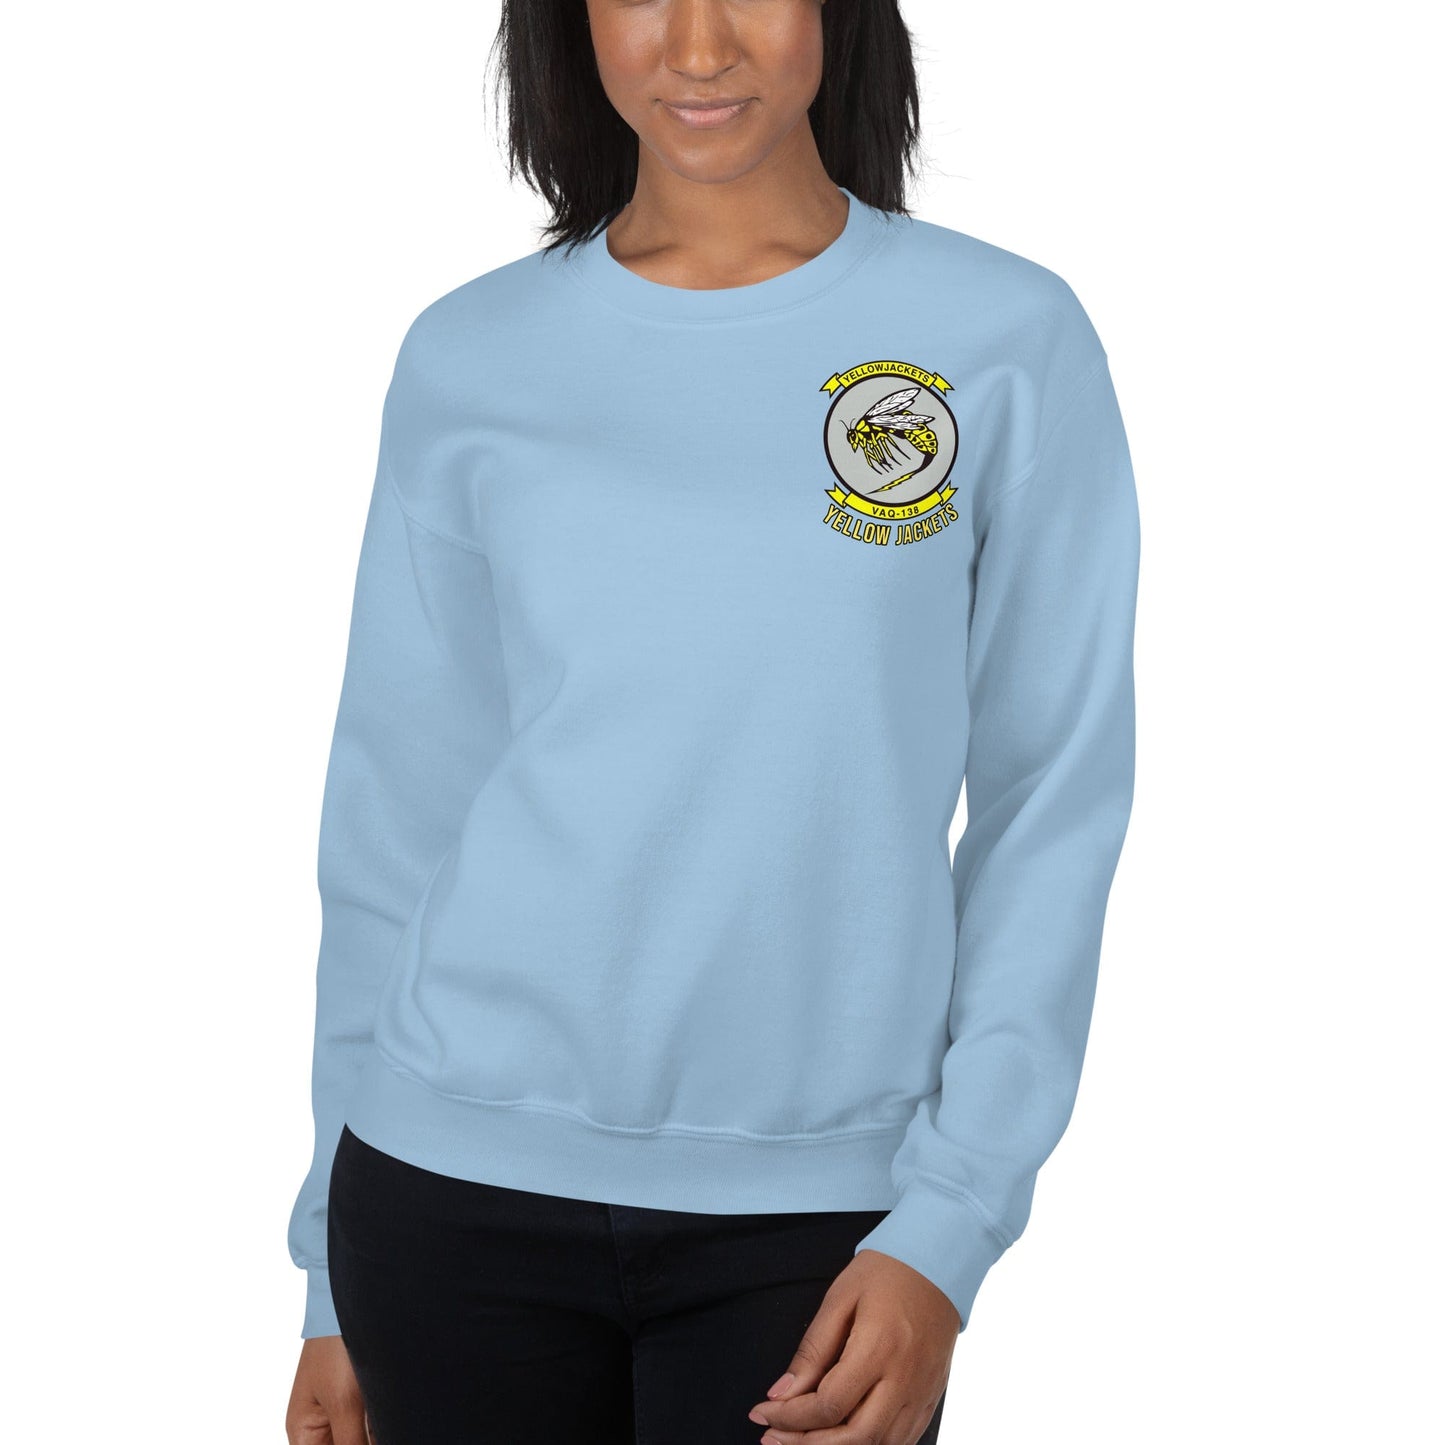 VAQ-138 "Yellow Jackets" Women's Sweatshirt